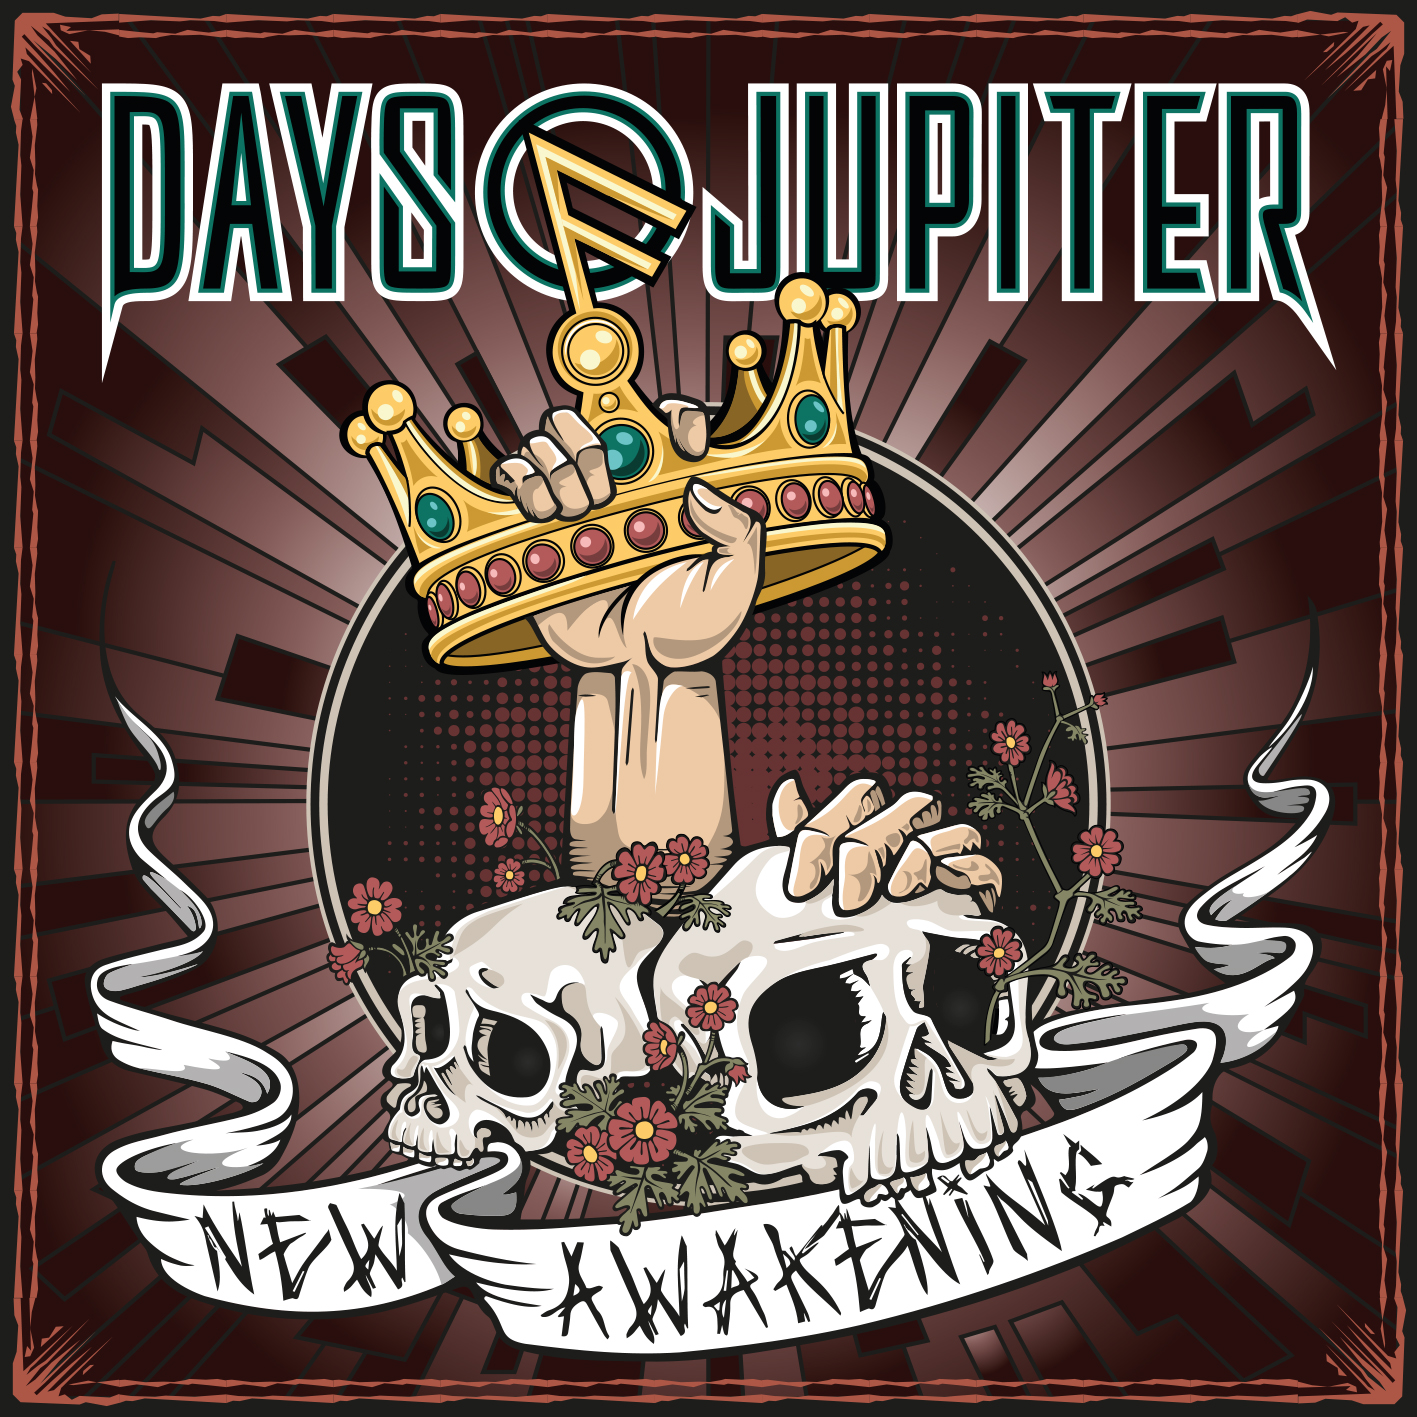 DaysOfJupiter_NewAwakening_Cover